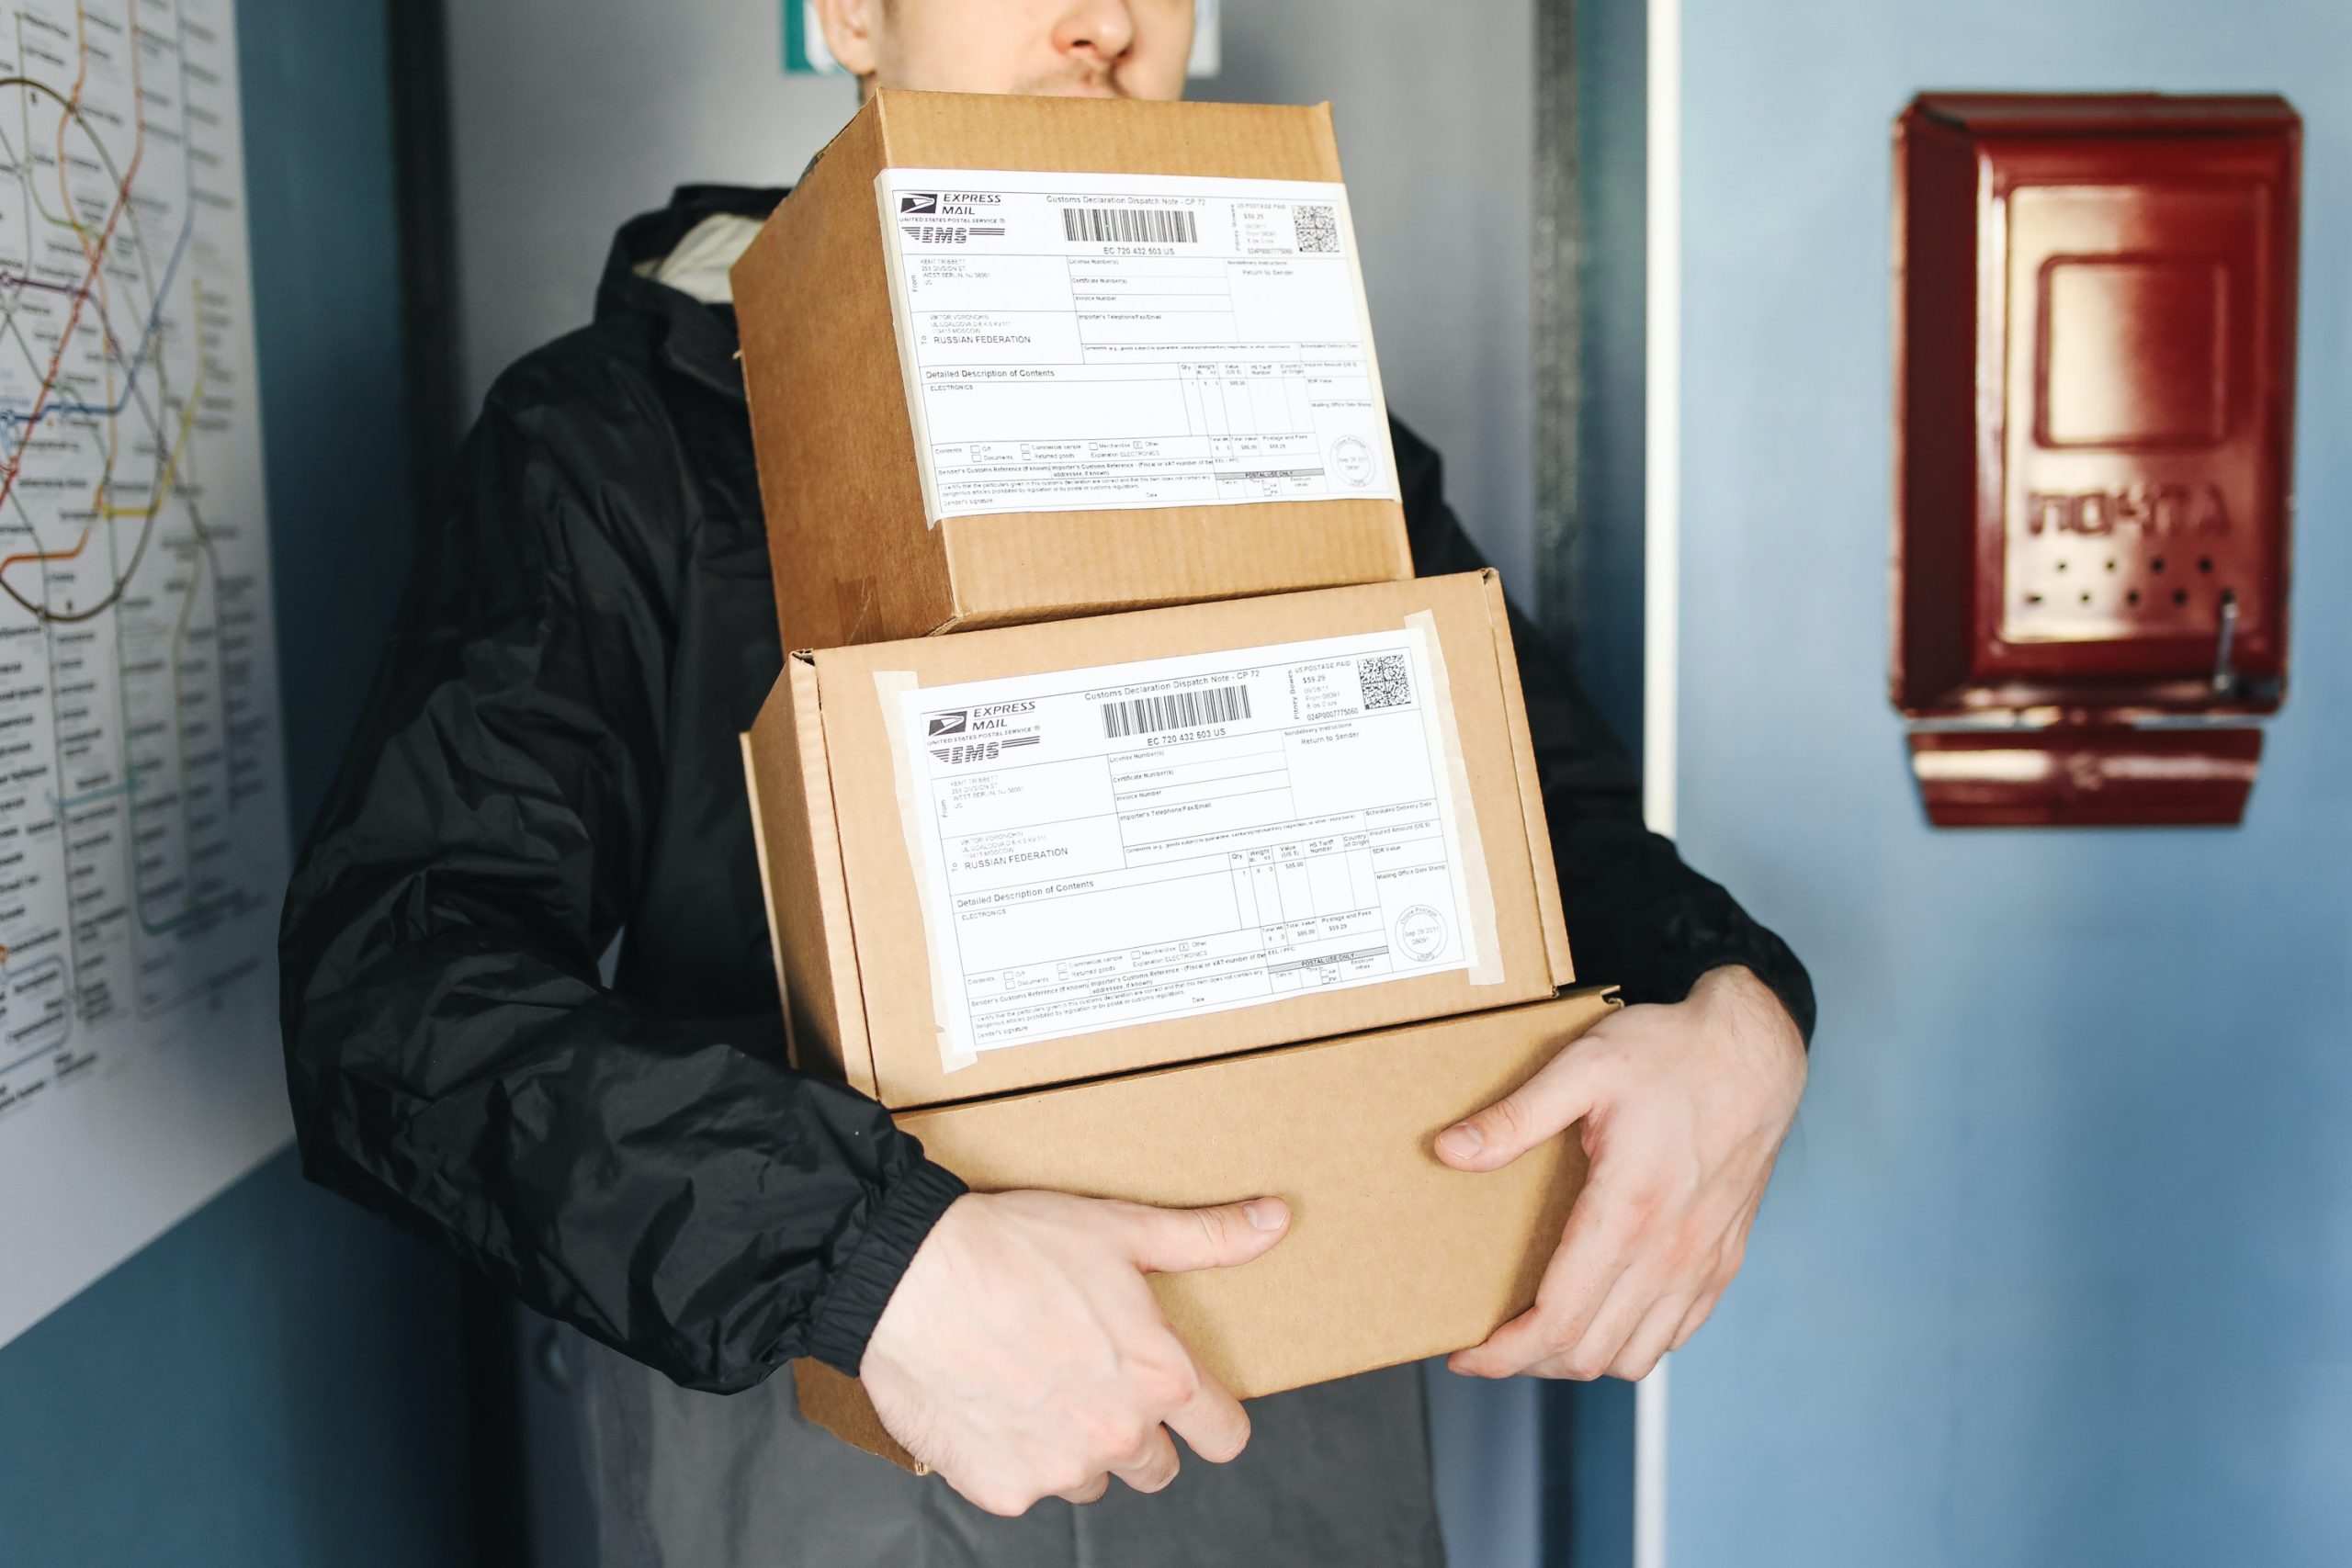 A man holding a few boxes